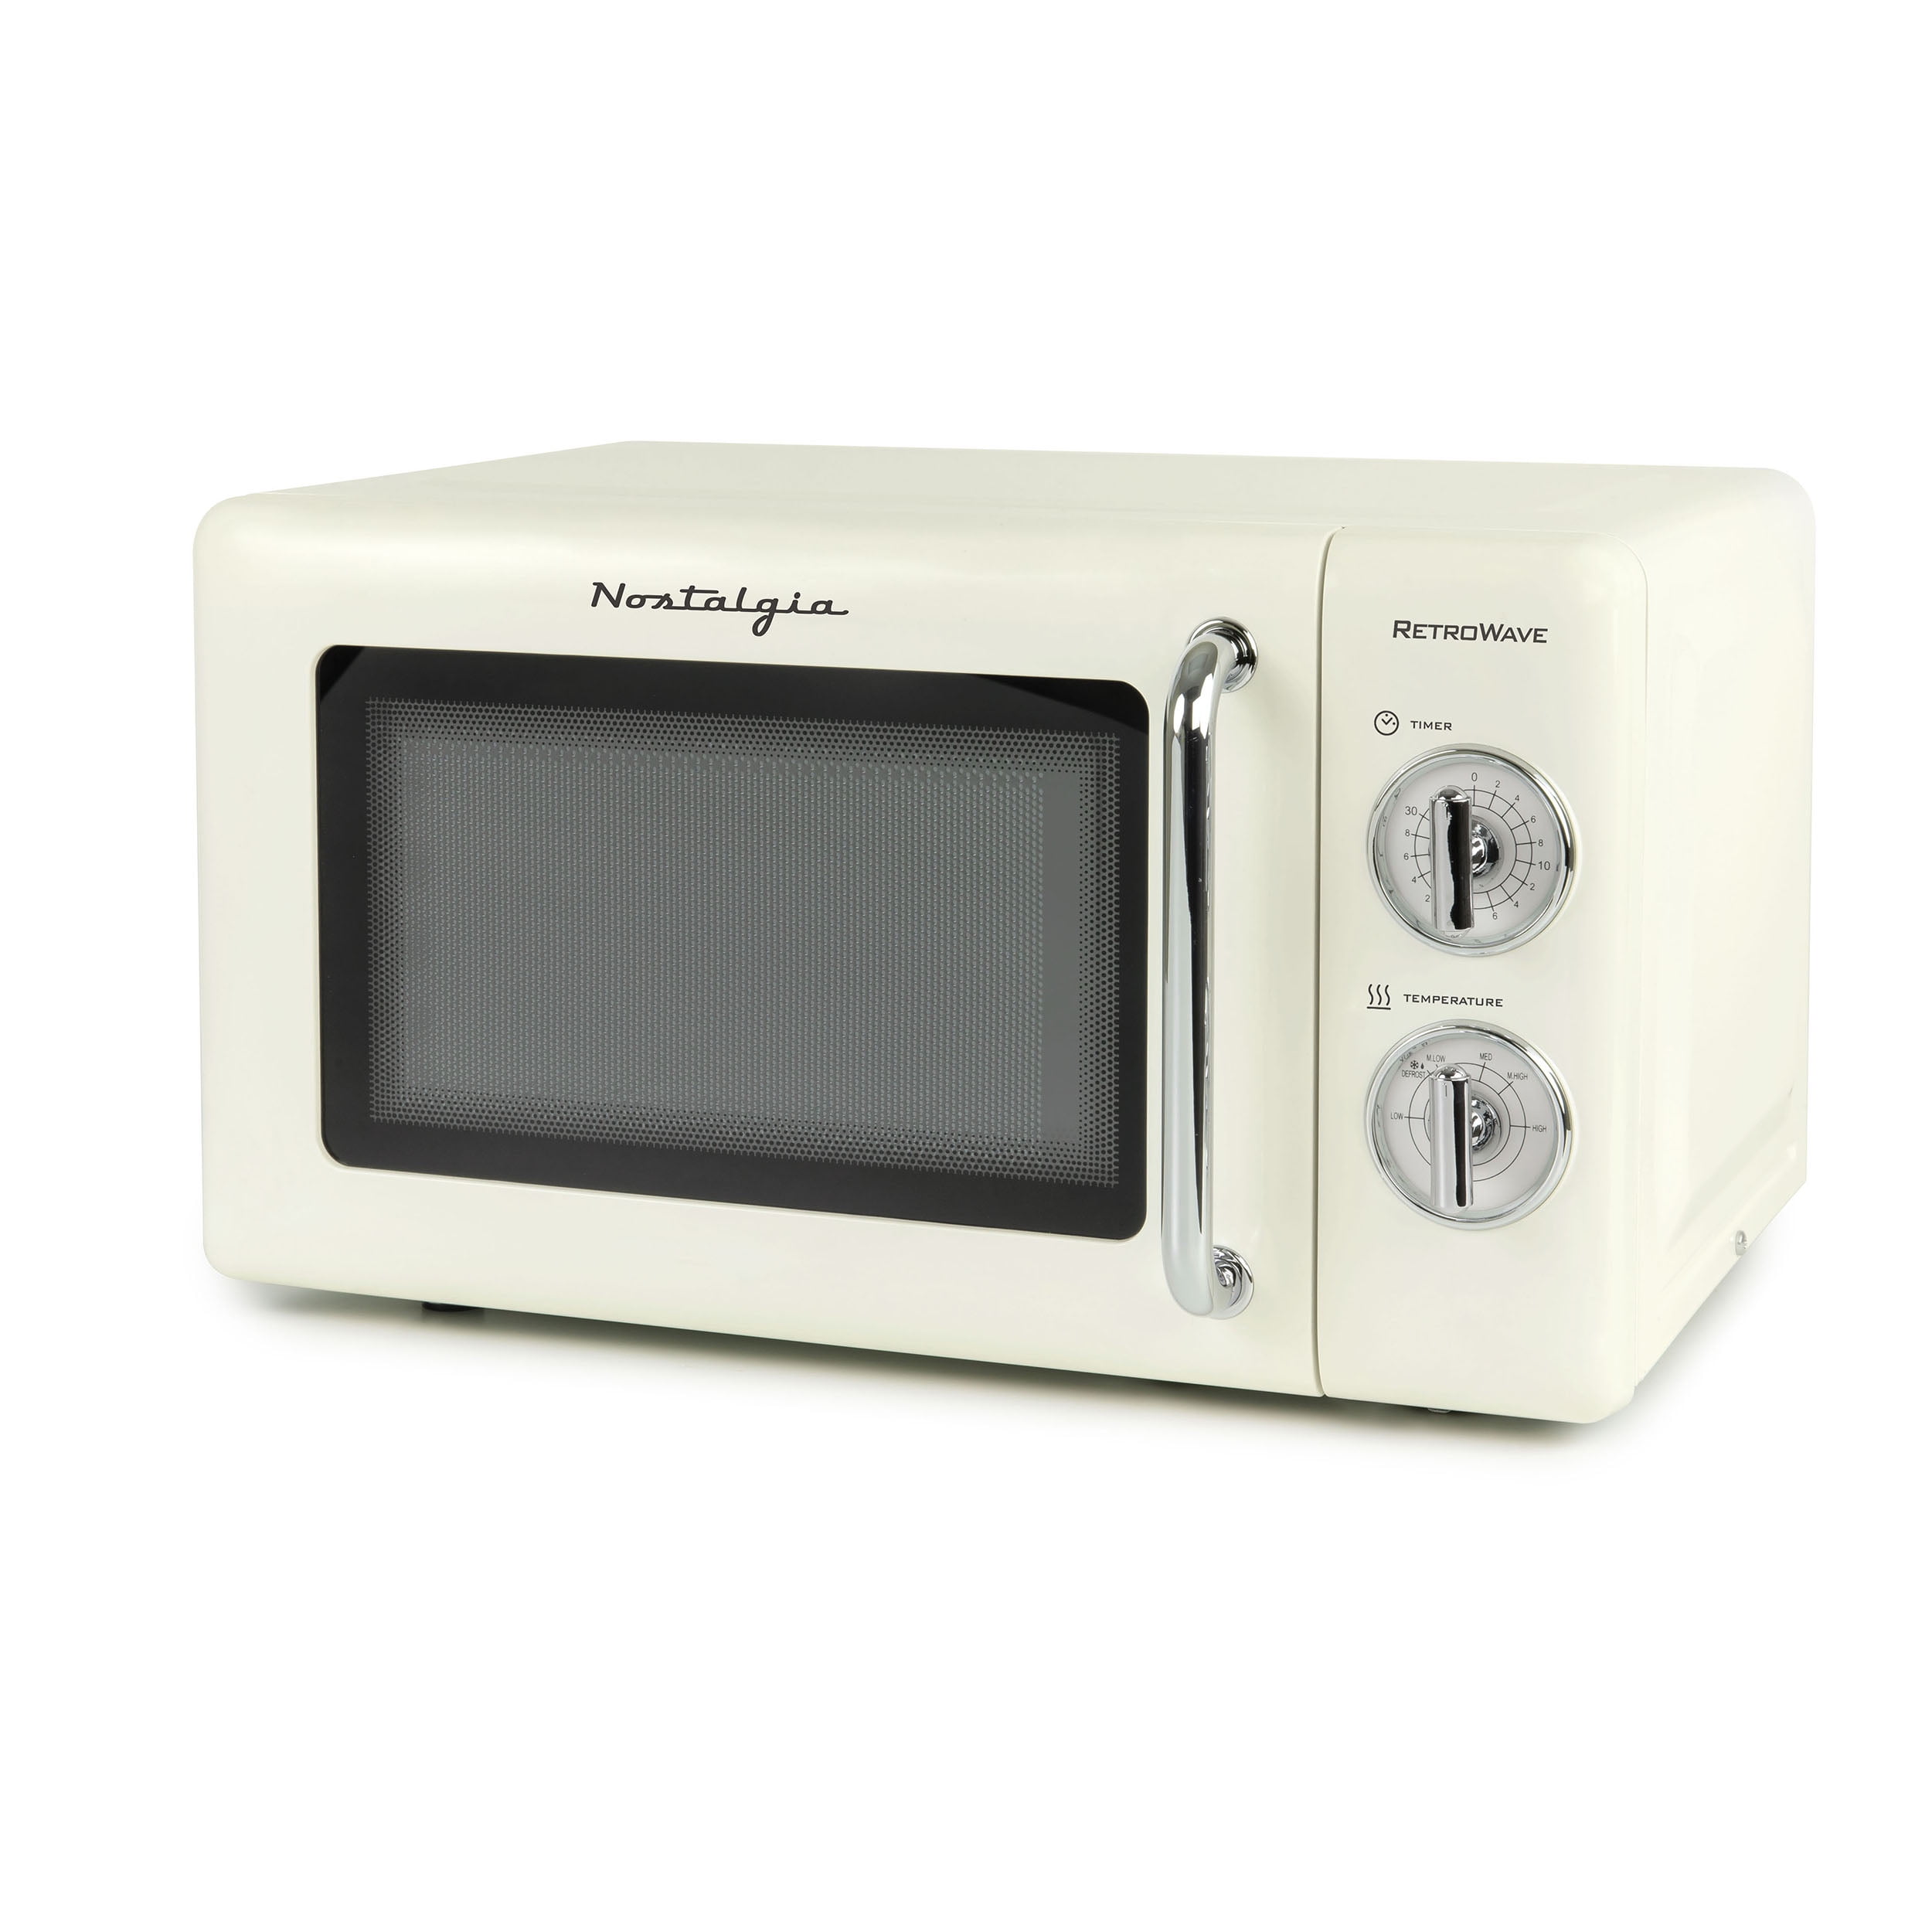 Ft Nostalgia RMOD7IVY 0.7 Cu 700-watt Microwave With Retro Turn Dials /& Chrome for sale online